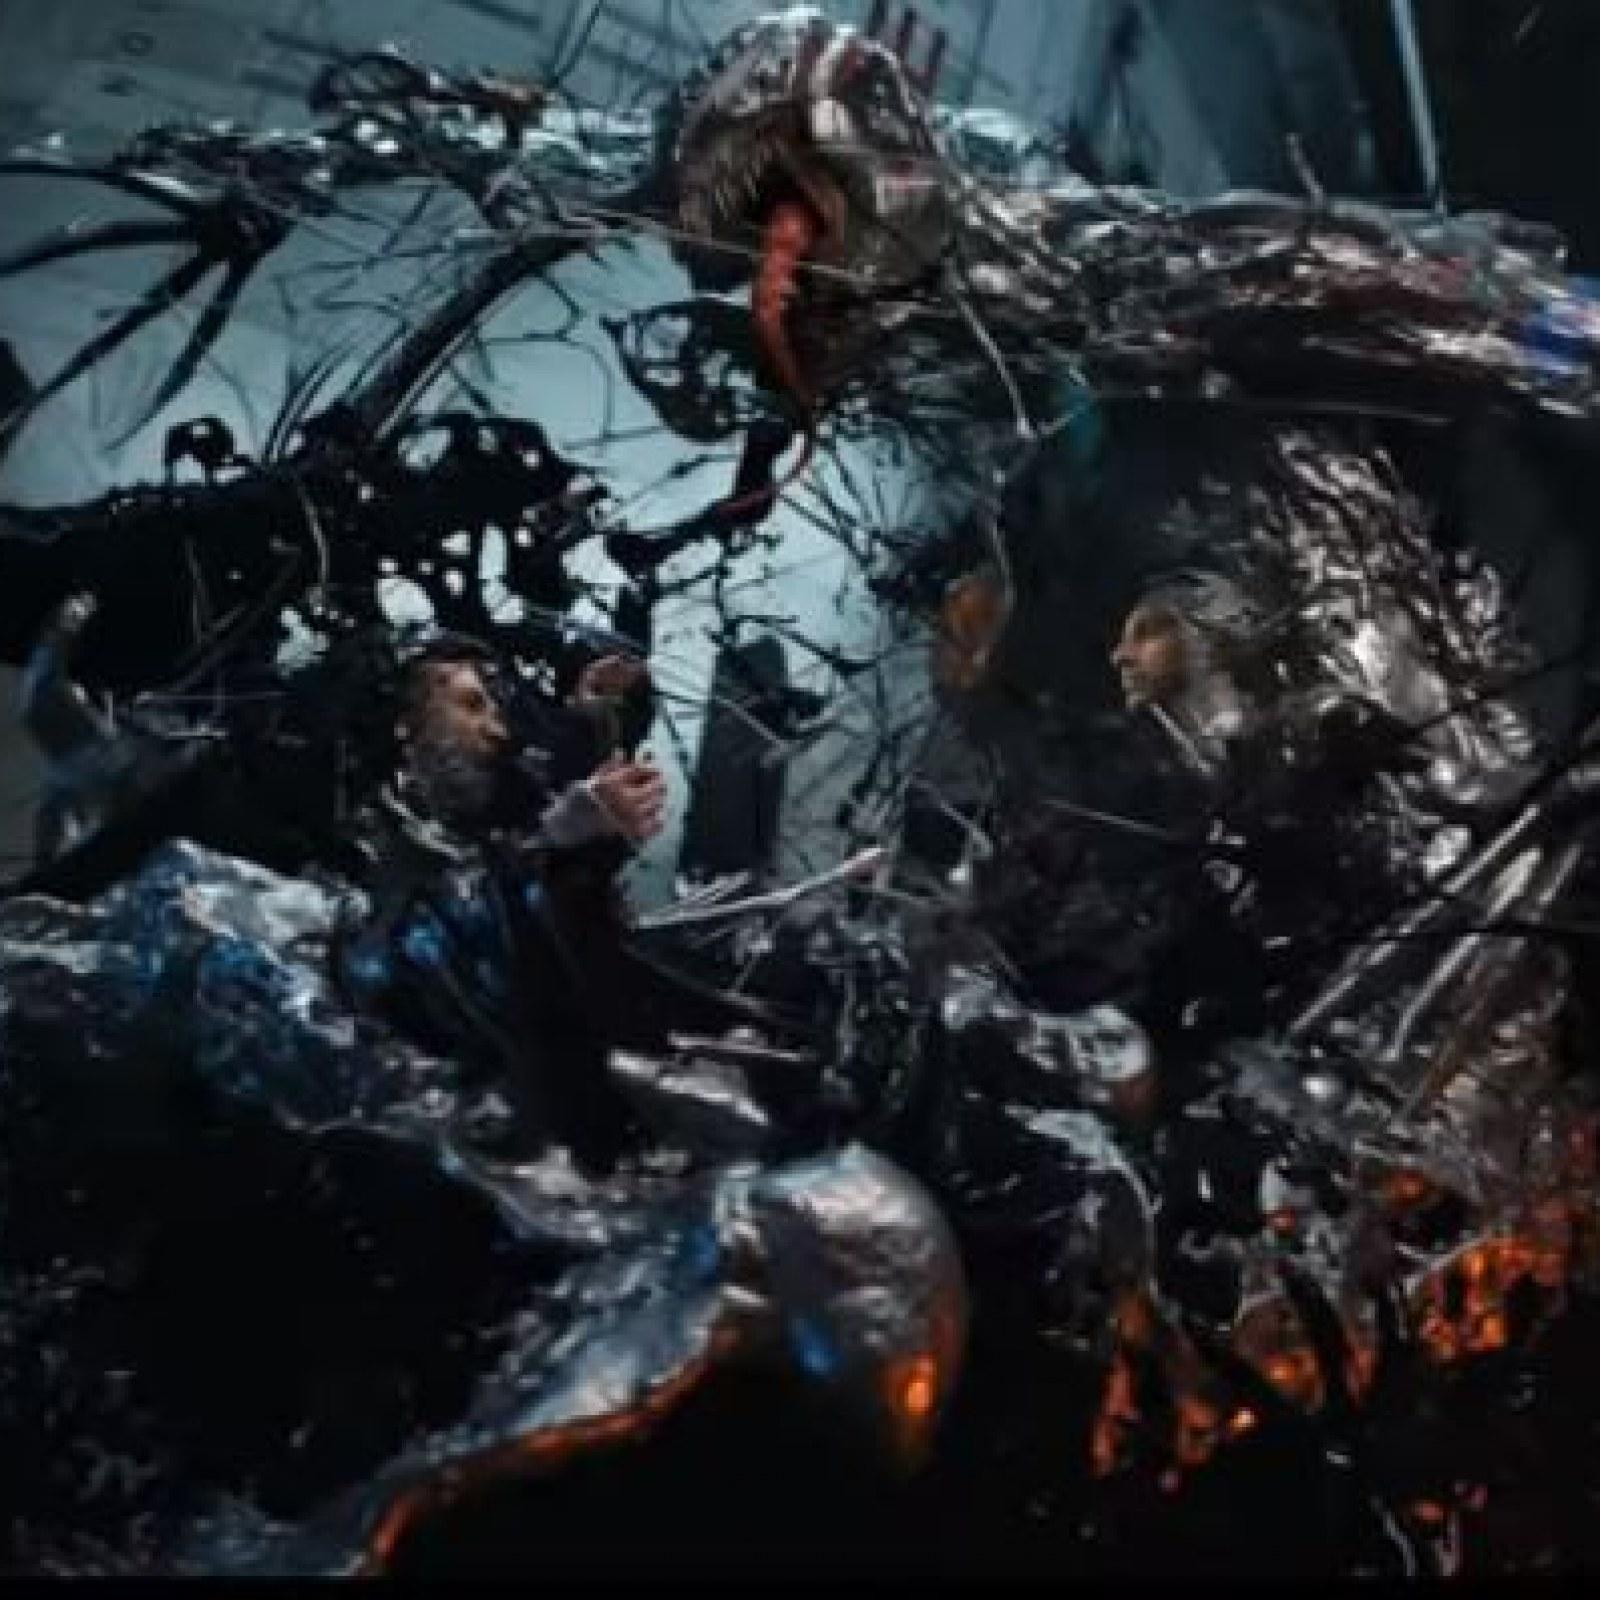 New 'Venom' Shows More Symbiote Action